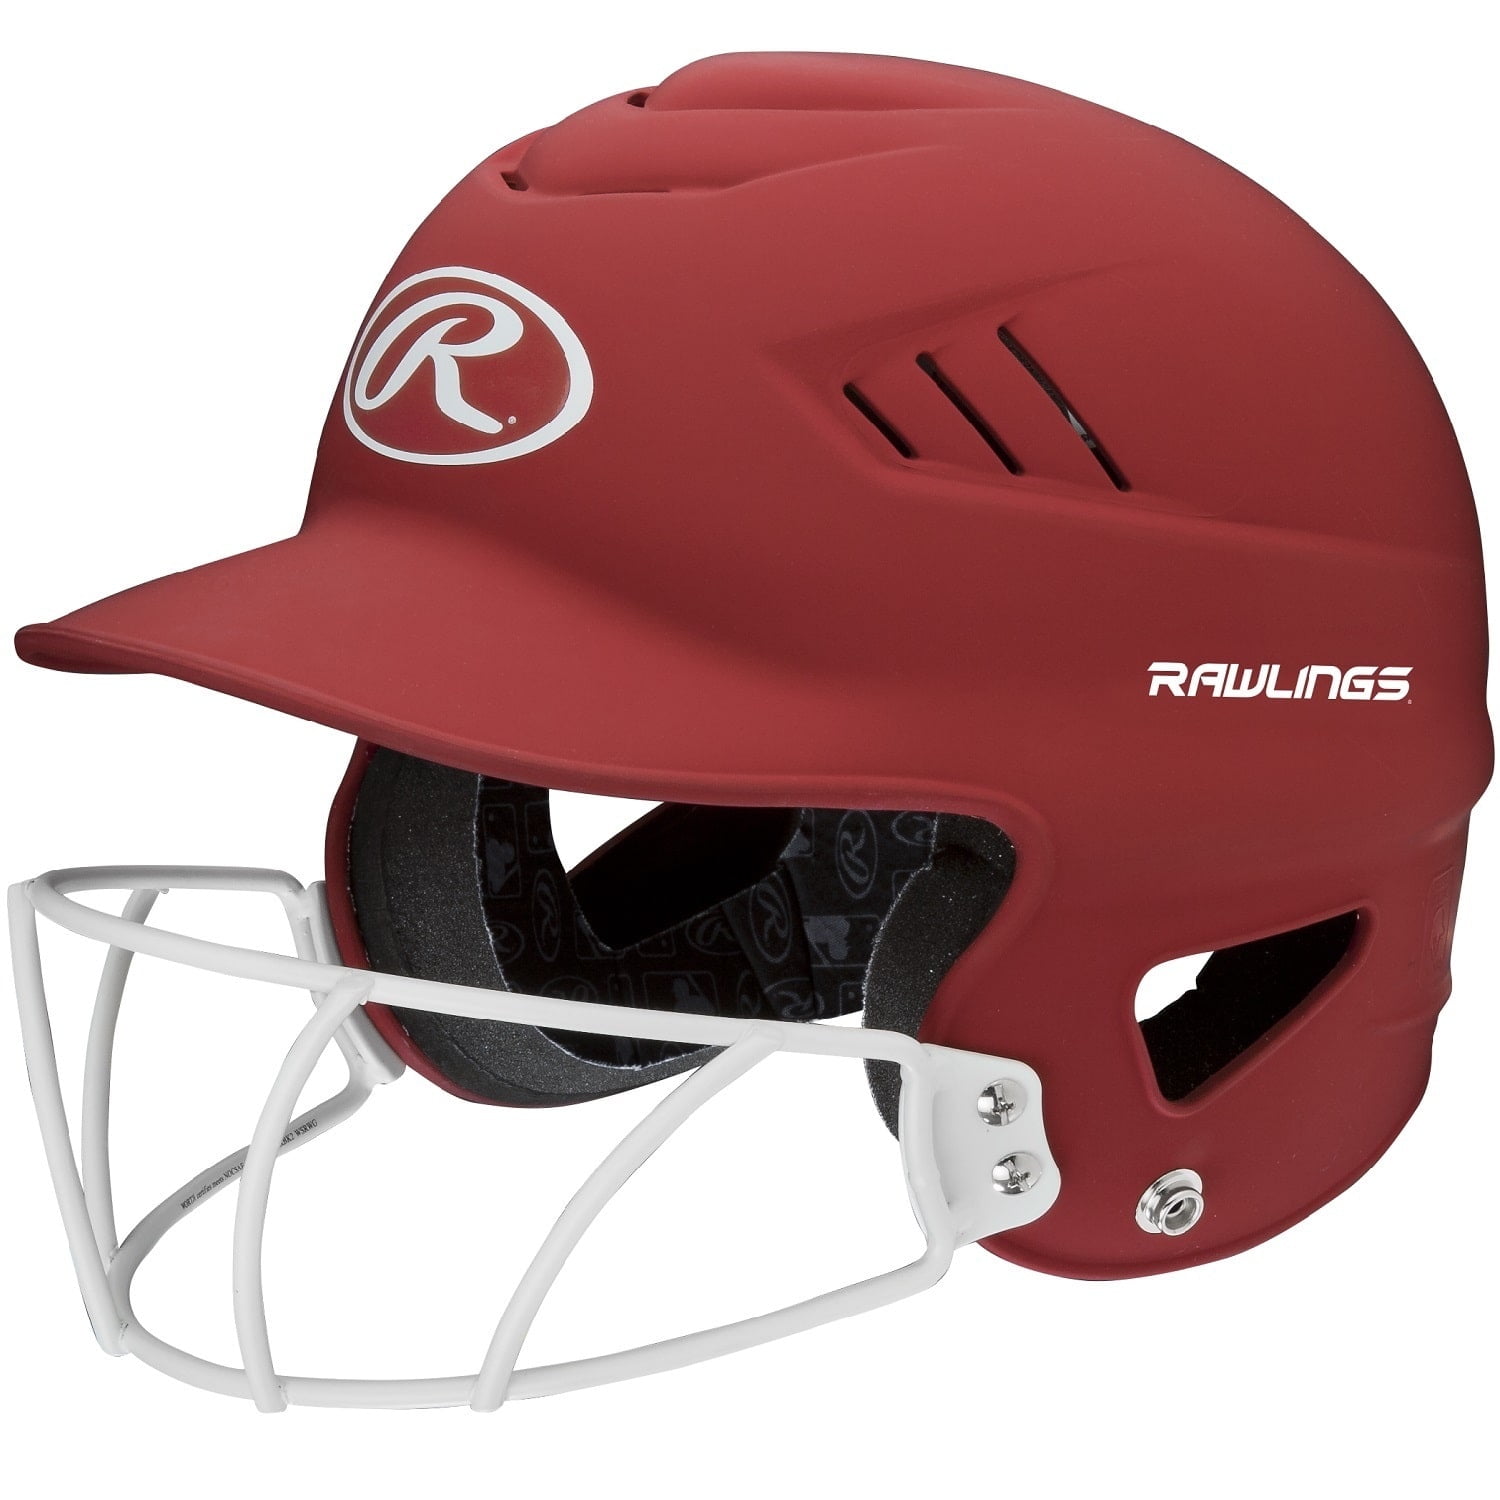 Rawlings Coolflo/Vapor OSFM Softball Batting Helmet with Face Guard, Metallic Pink